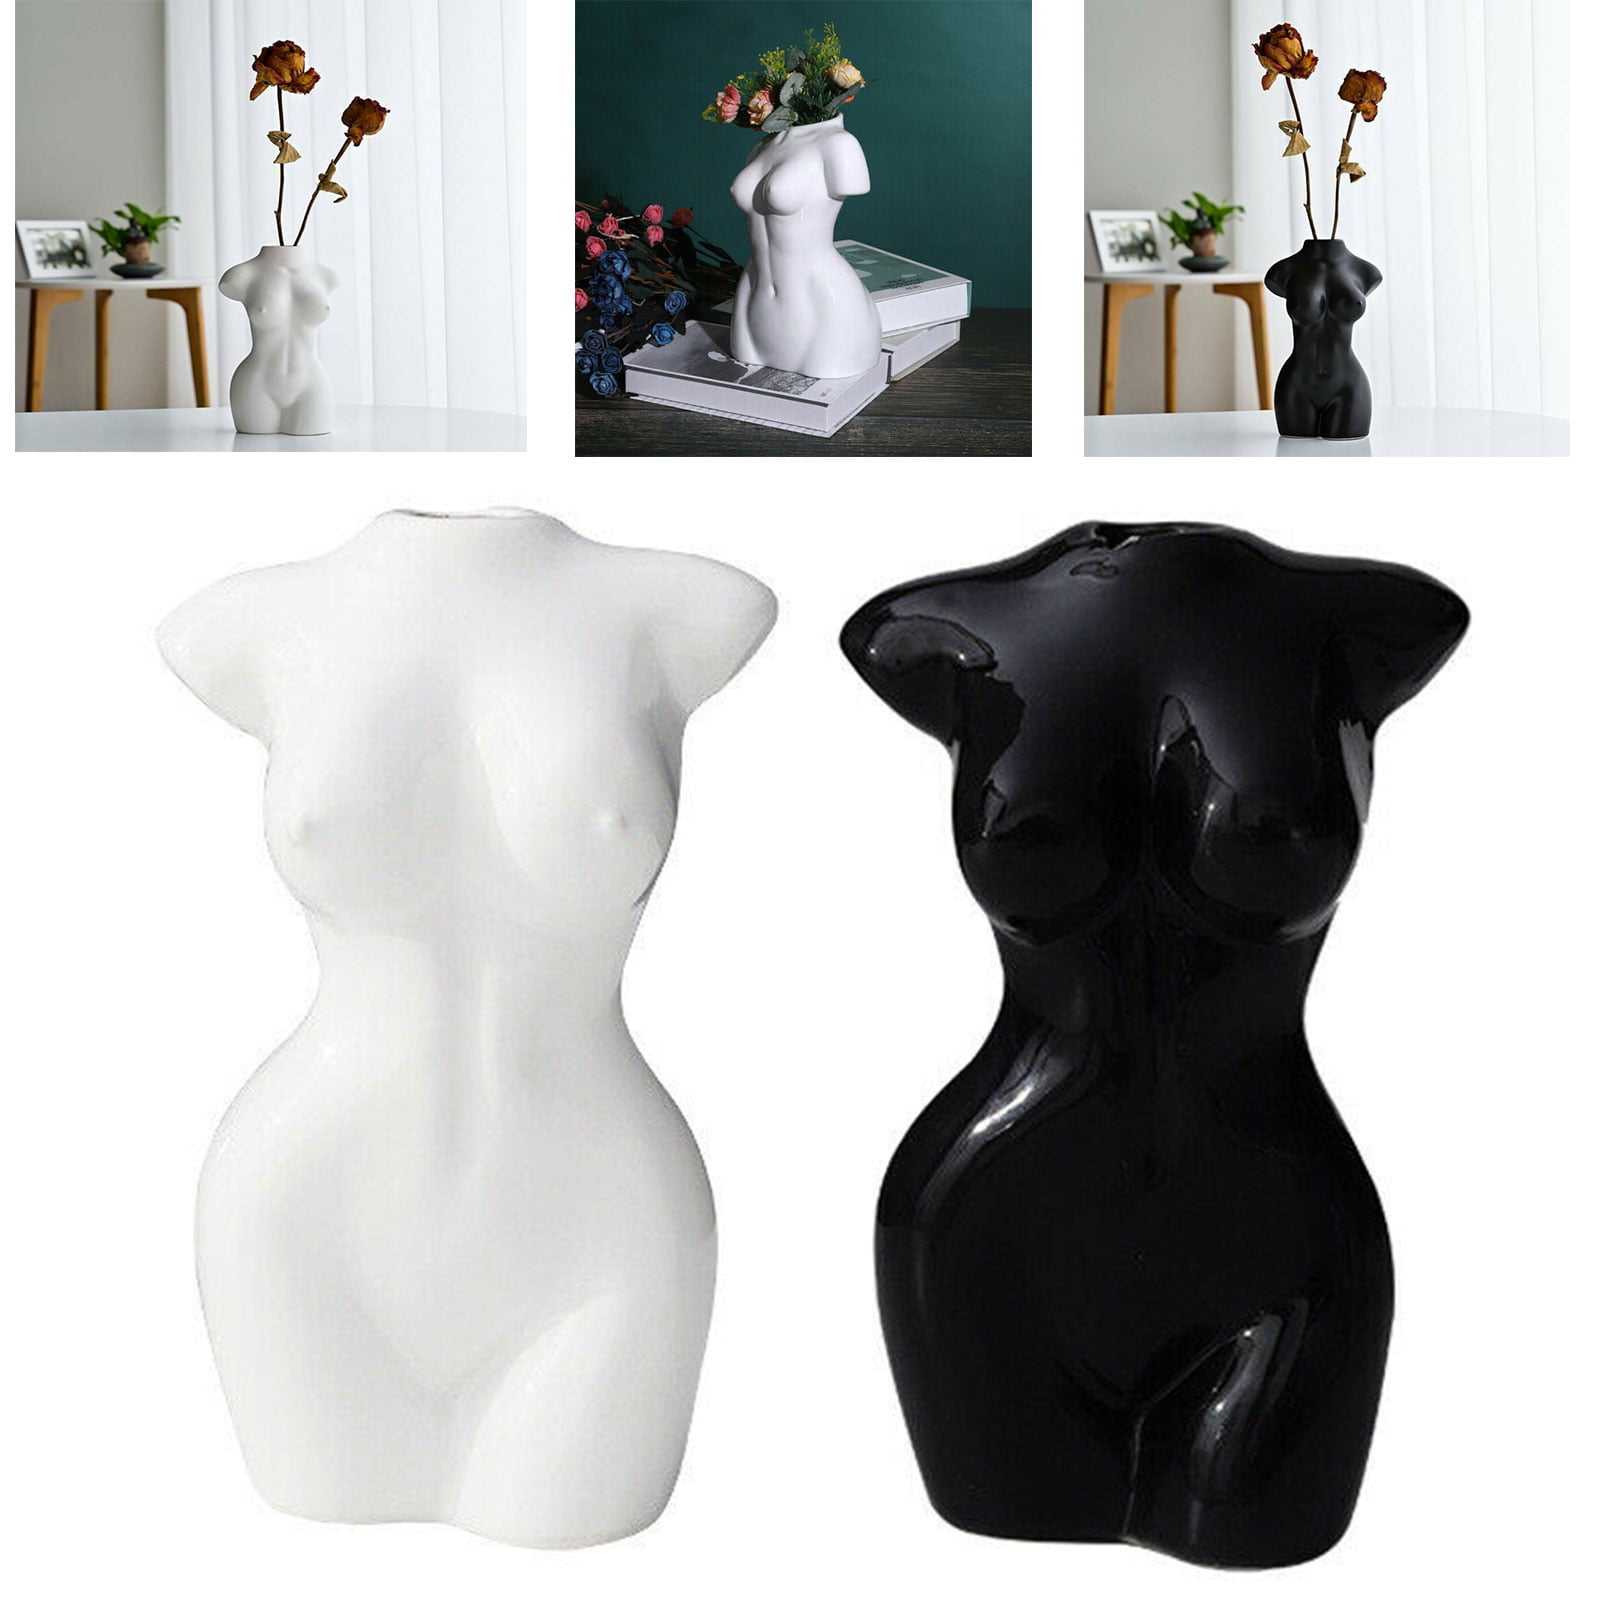 Details about   Nordic Creative Ceramics Little People Body Art Flower Pot Desktop Window Crafts 